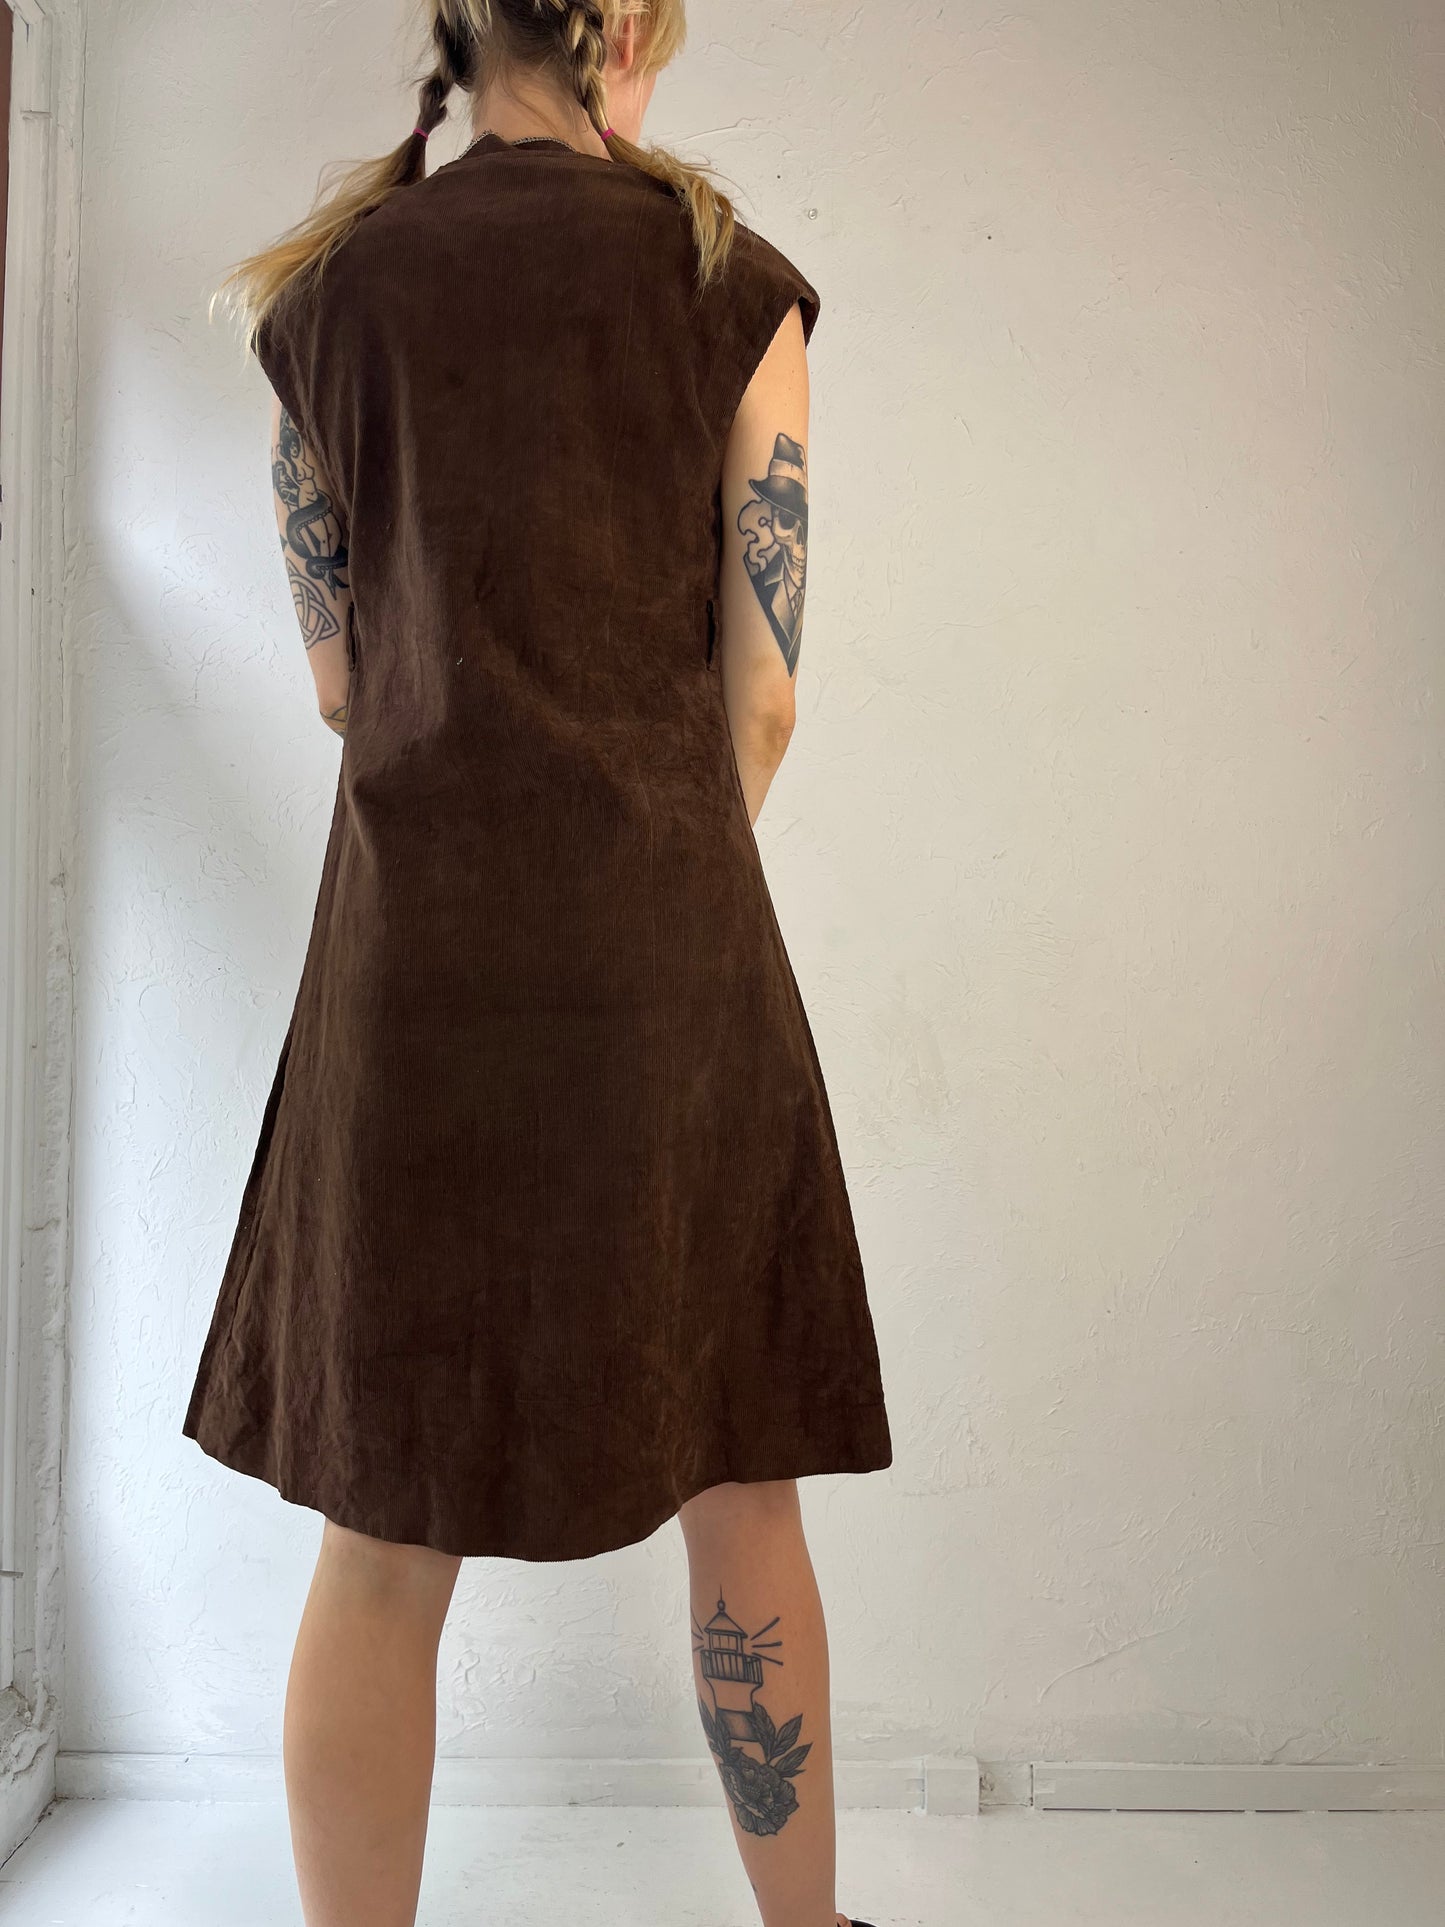 90s Brown Corduroy Sleeveless Dress / Small - Medium